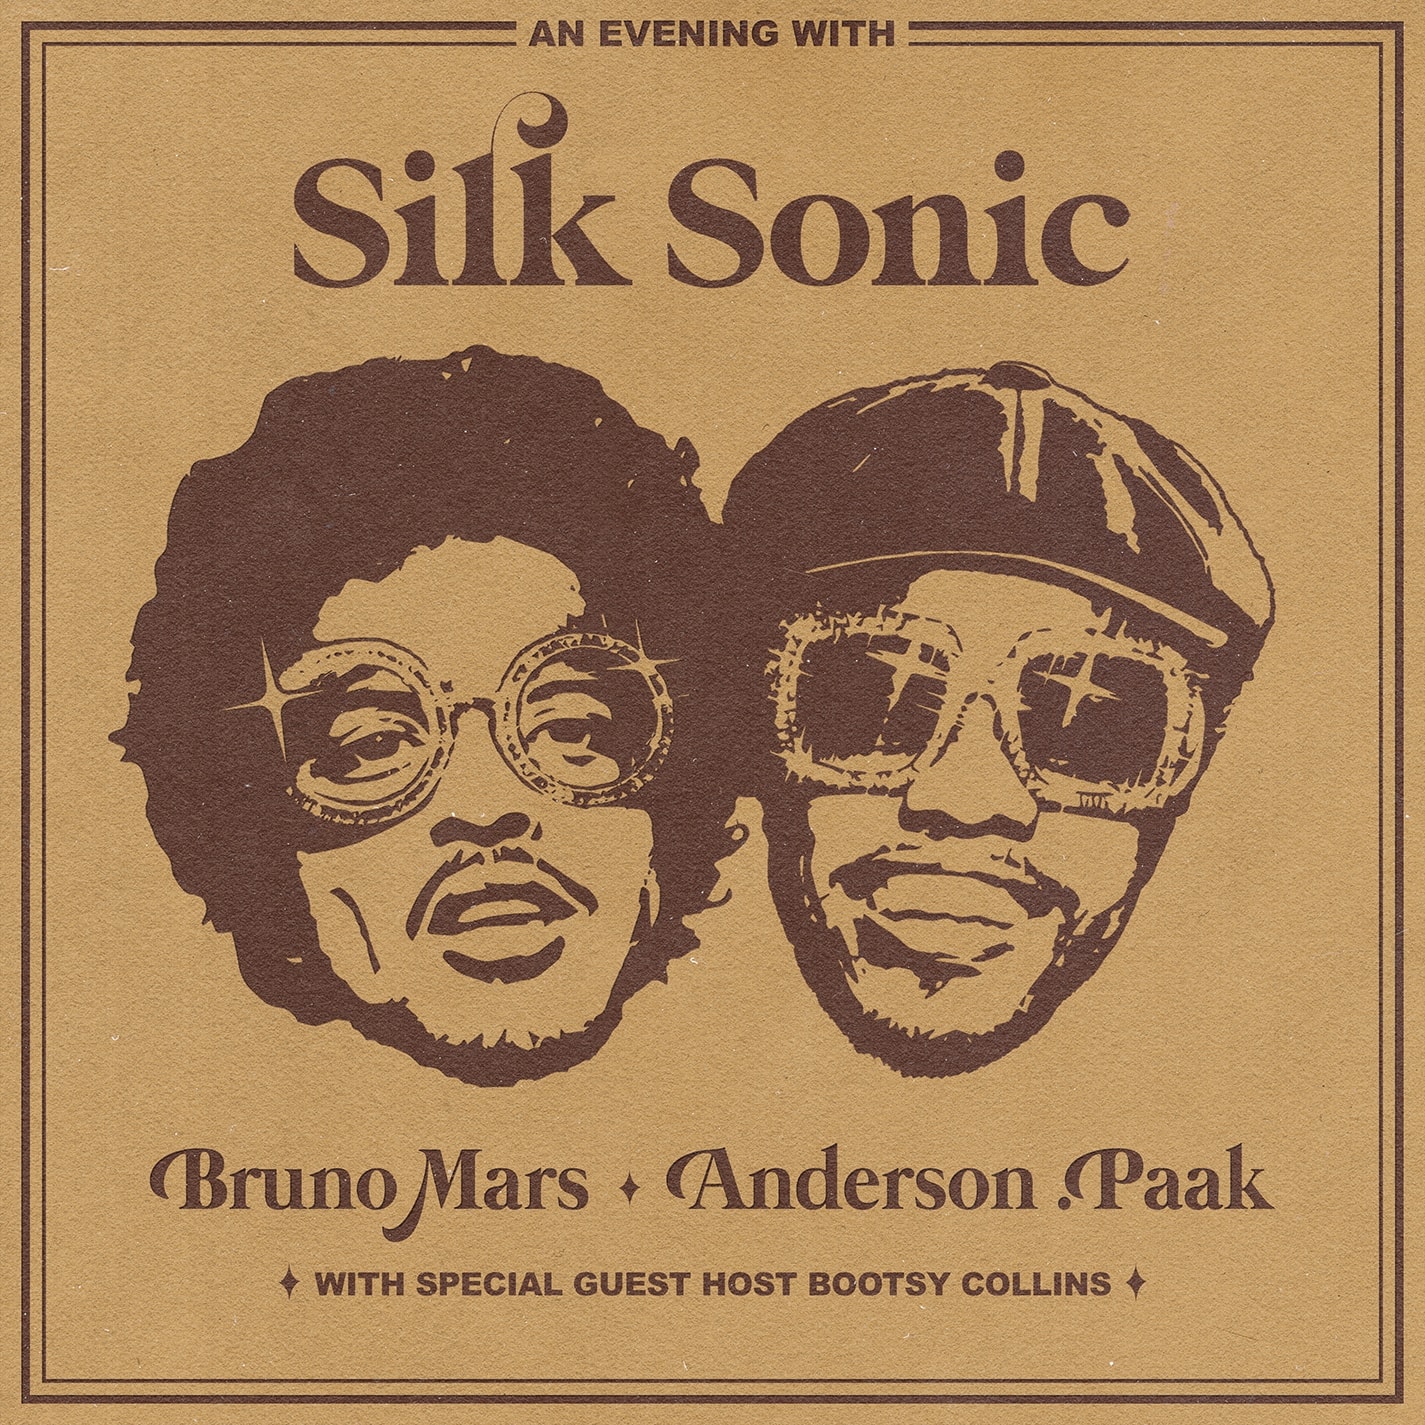  Silk Sonic &#8211; An Evening With Silk Sonic